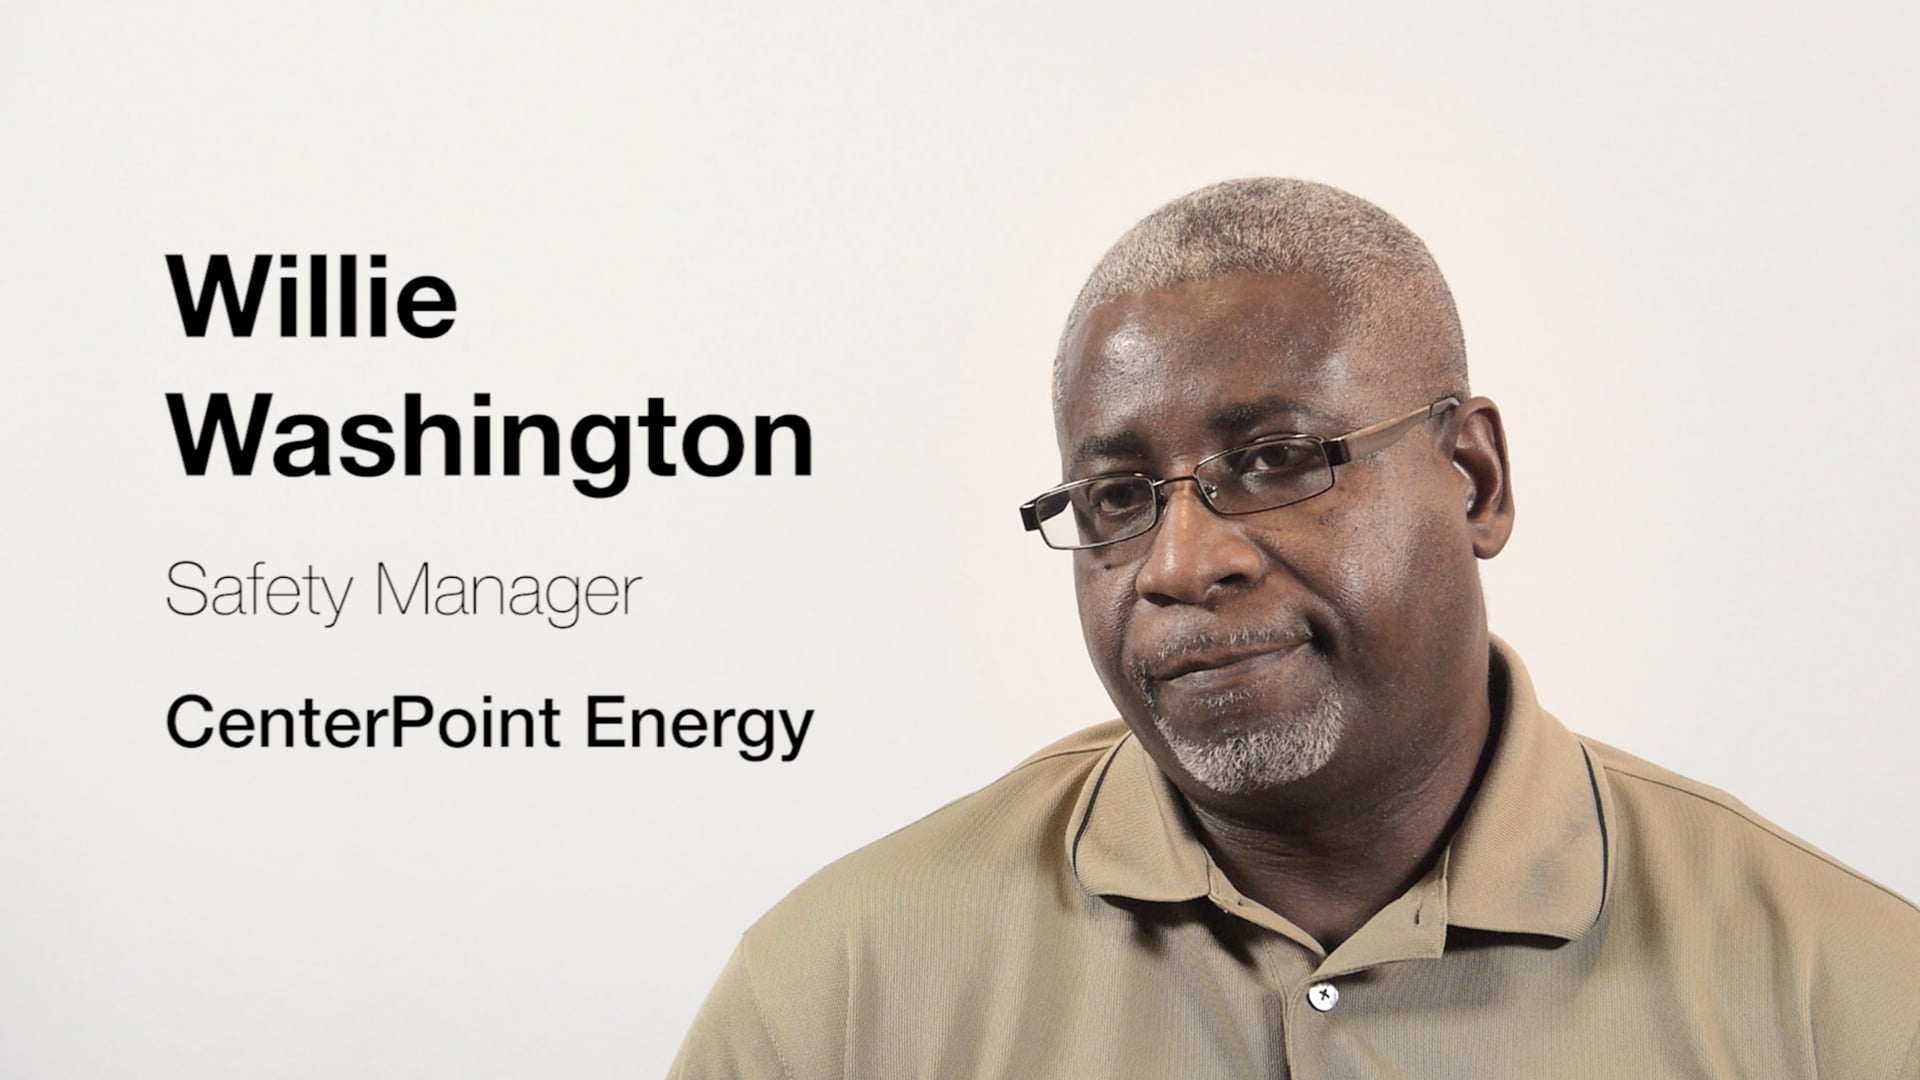 CenterPoint Energy | Willie Washington